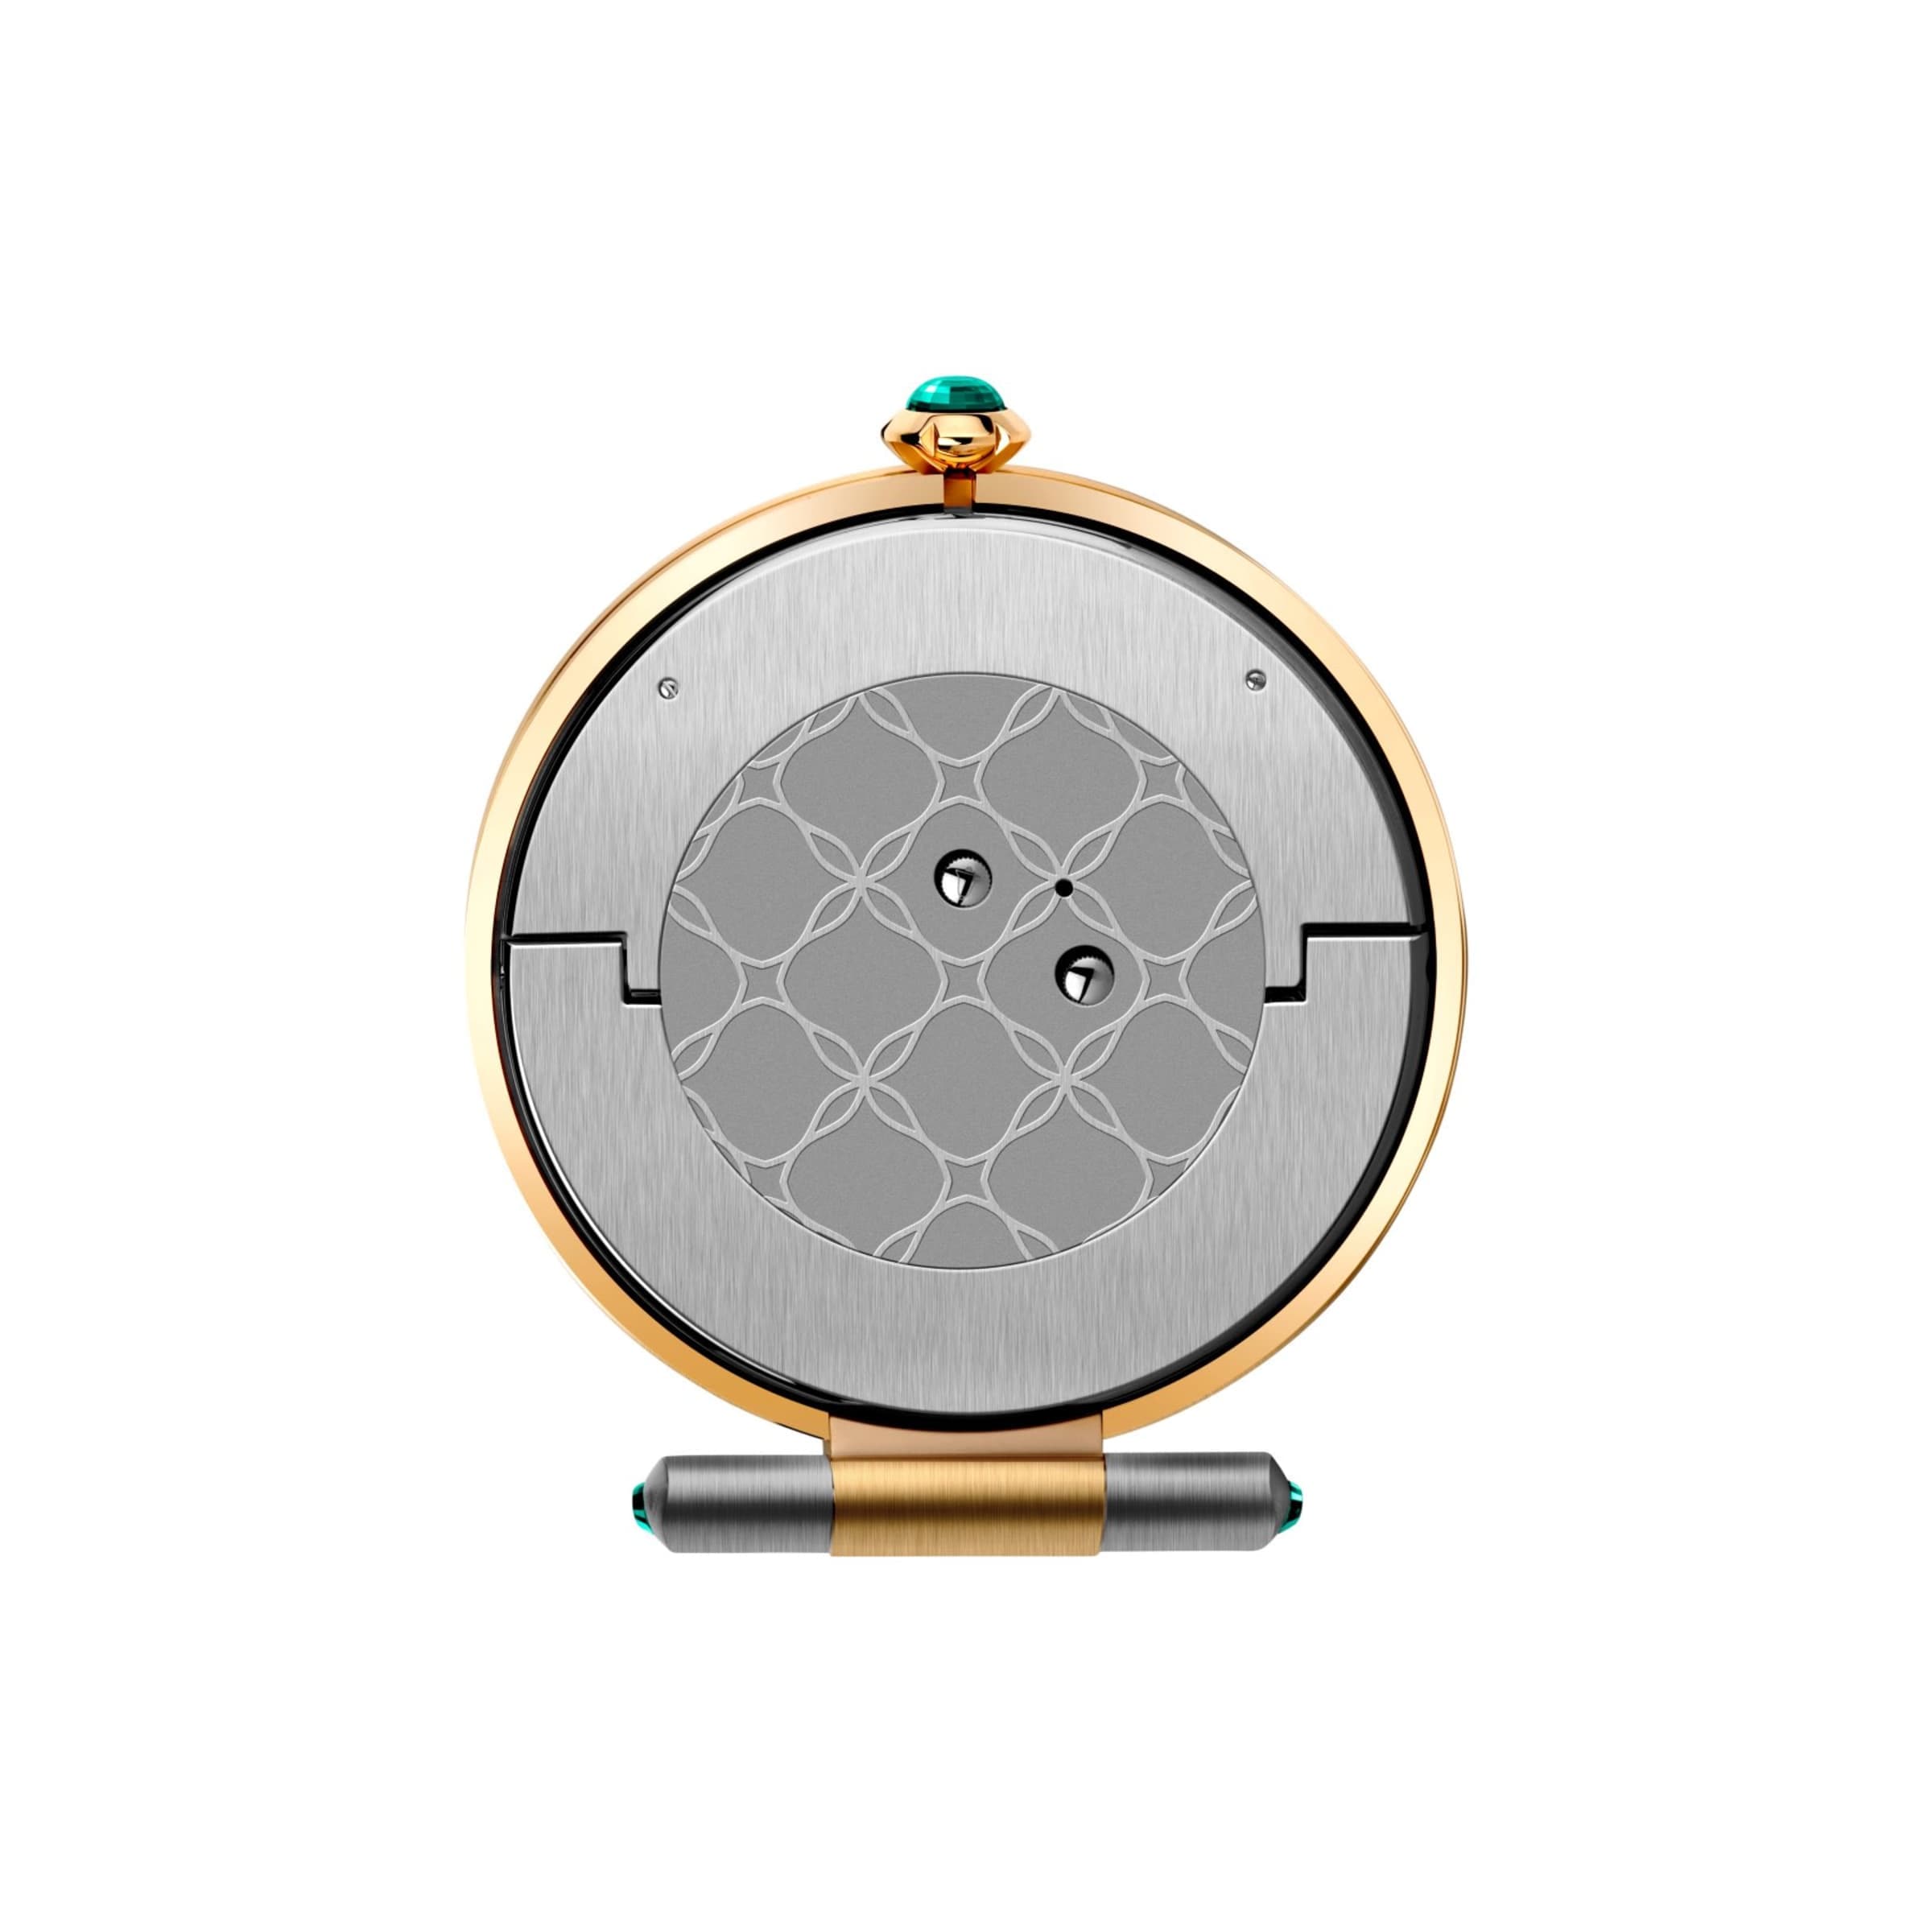 IMPERIALE ALARM CLOCK - Kamal Watch Company